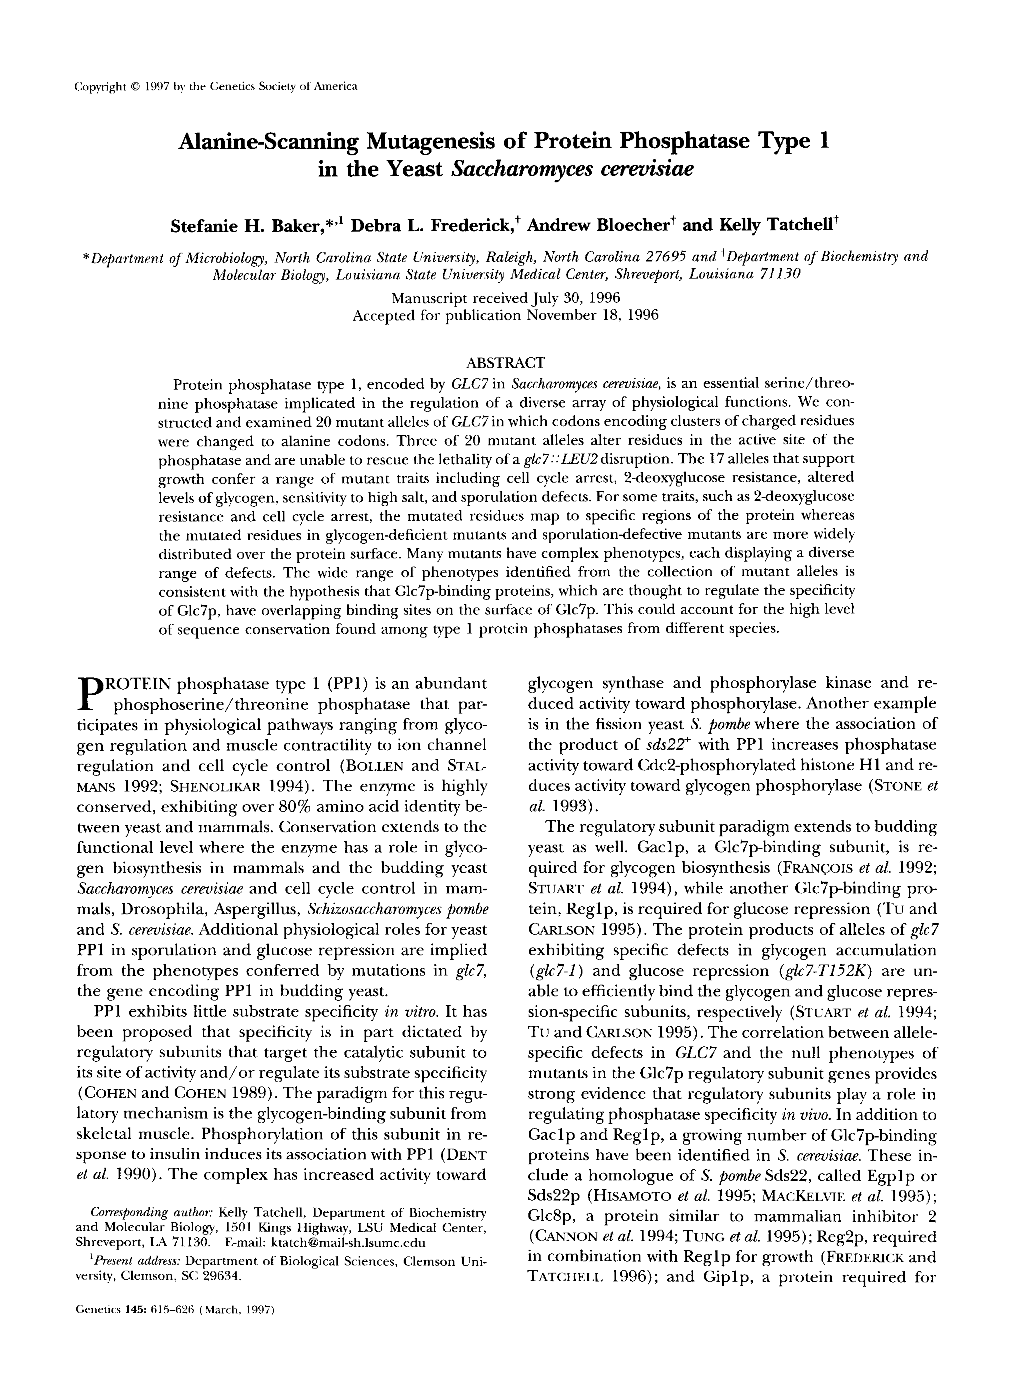 Alanine-Scanning Mutagenesis of Protein Phosphatase Type 1